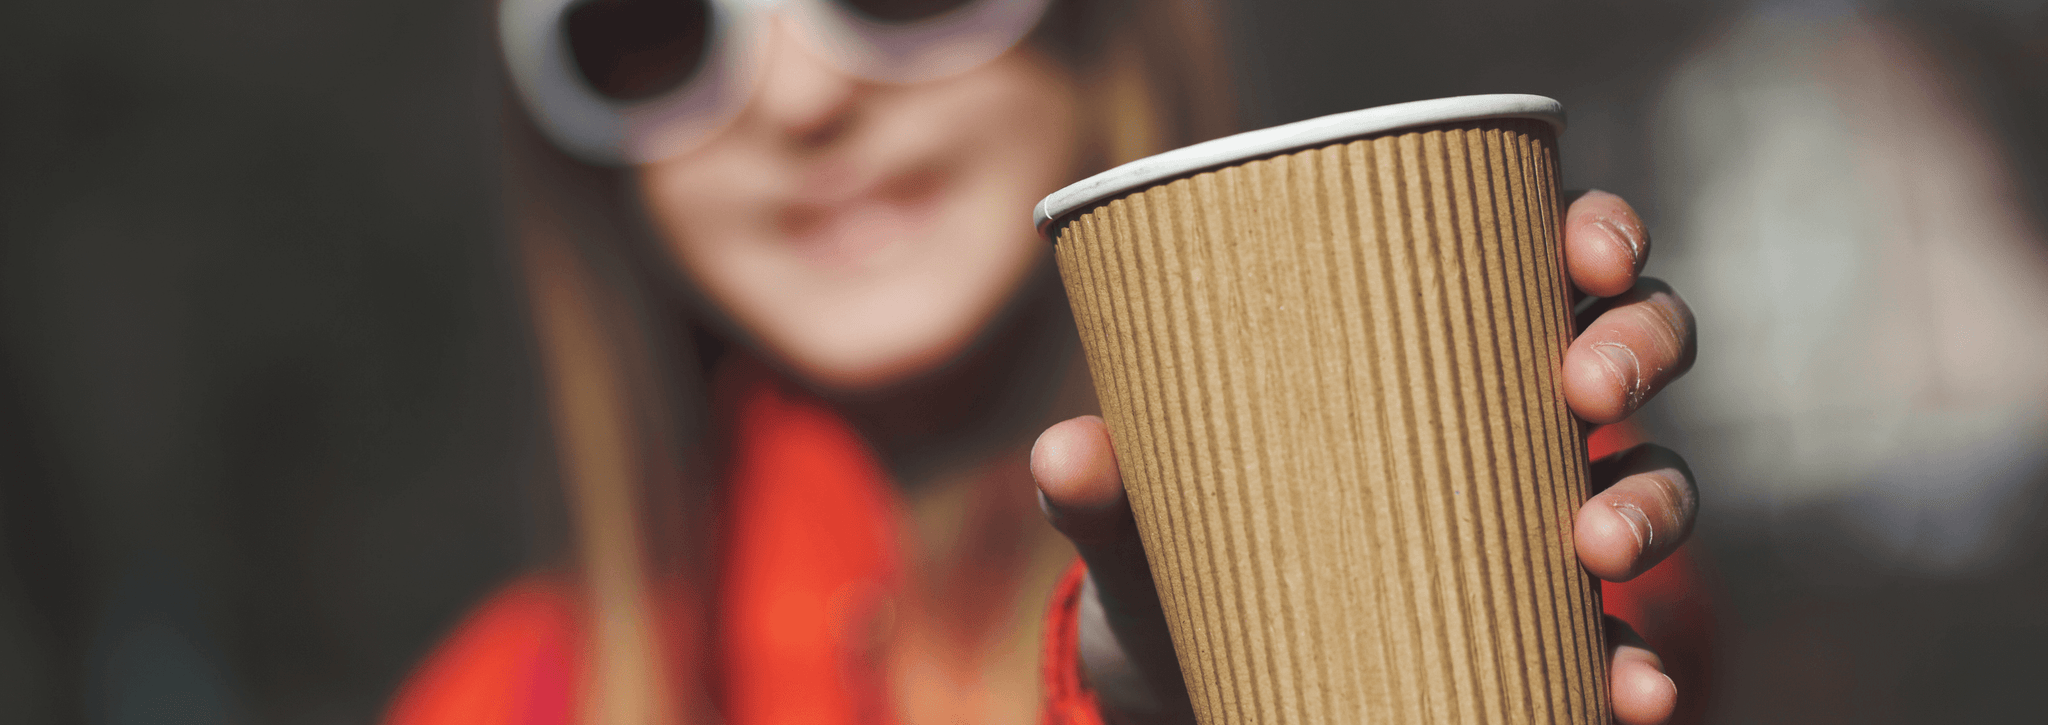 Woman using a single use coffee cup